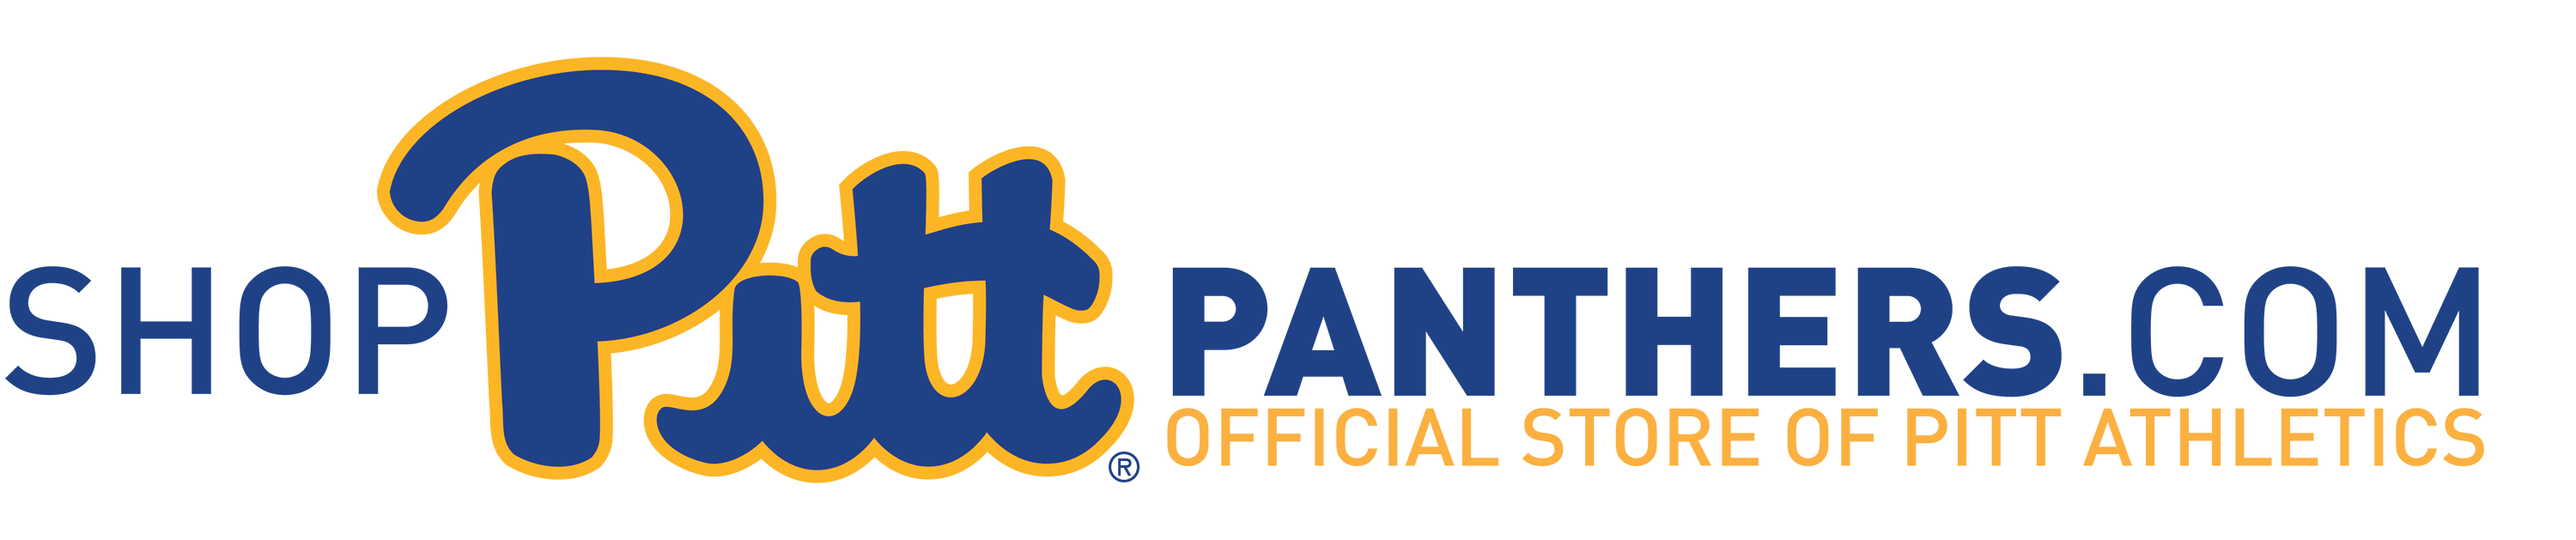 Pittsburgh Panthers Mobile Logo Image